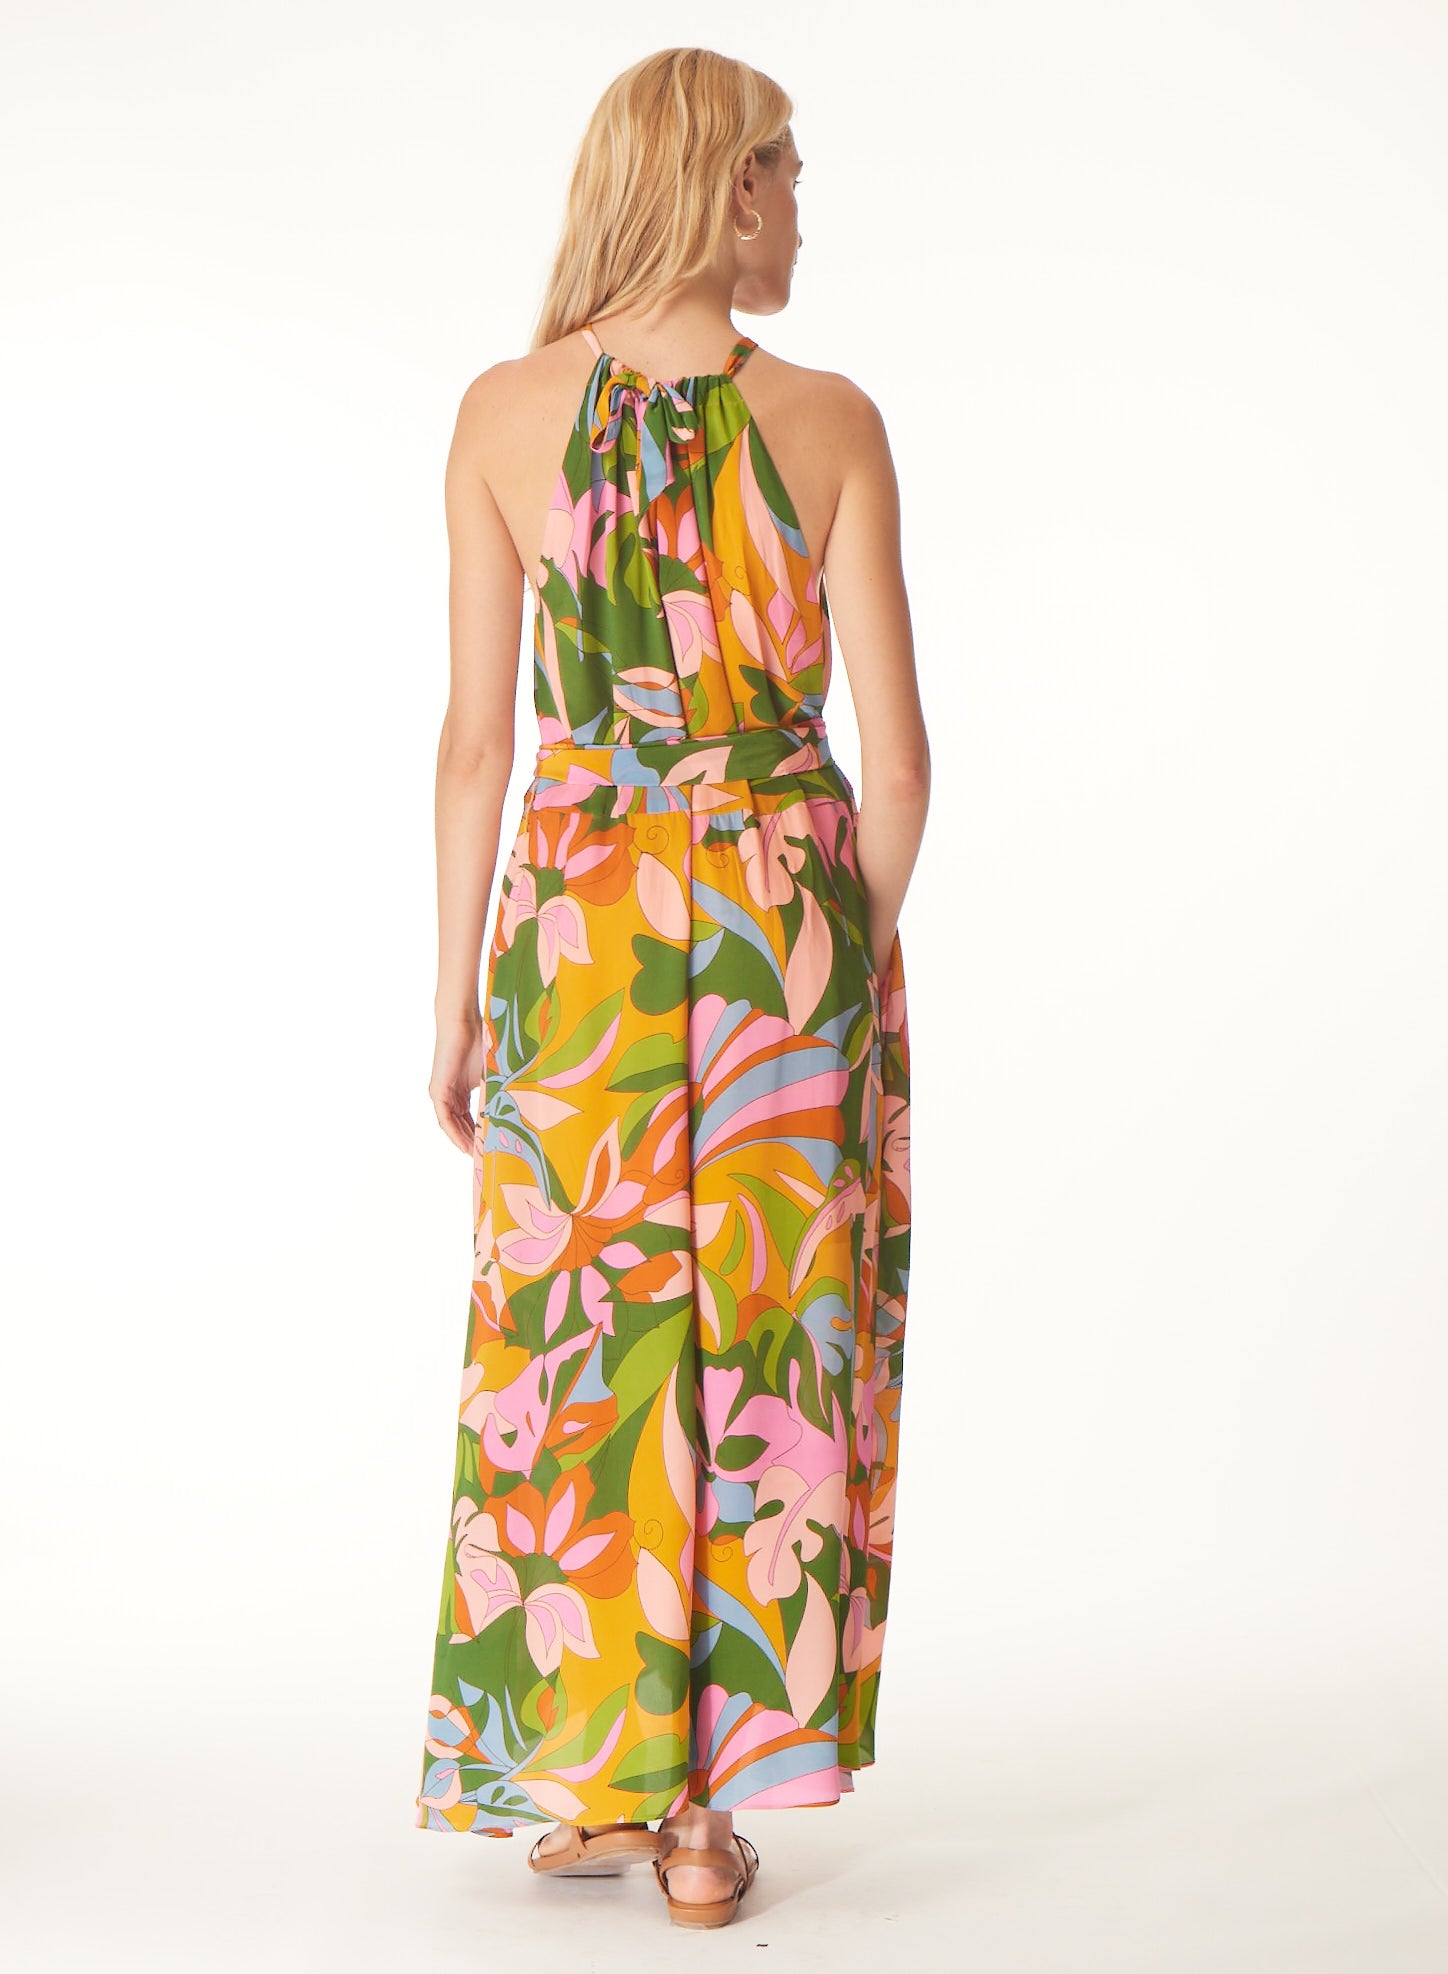 Talia dress in Tropical delight - Gilner Farrar